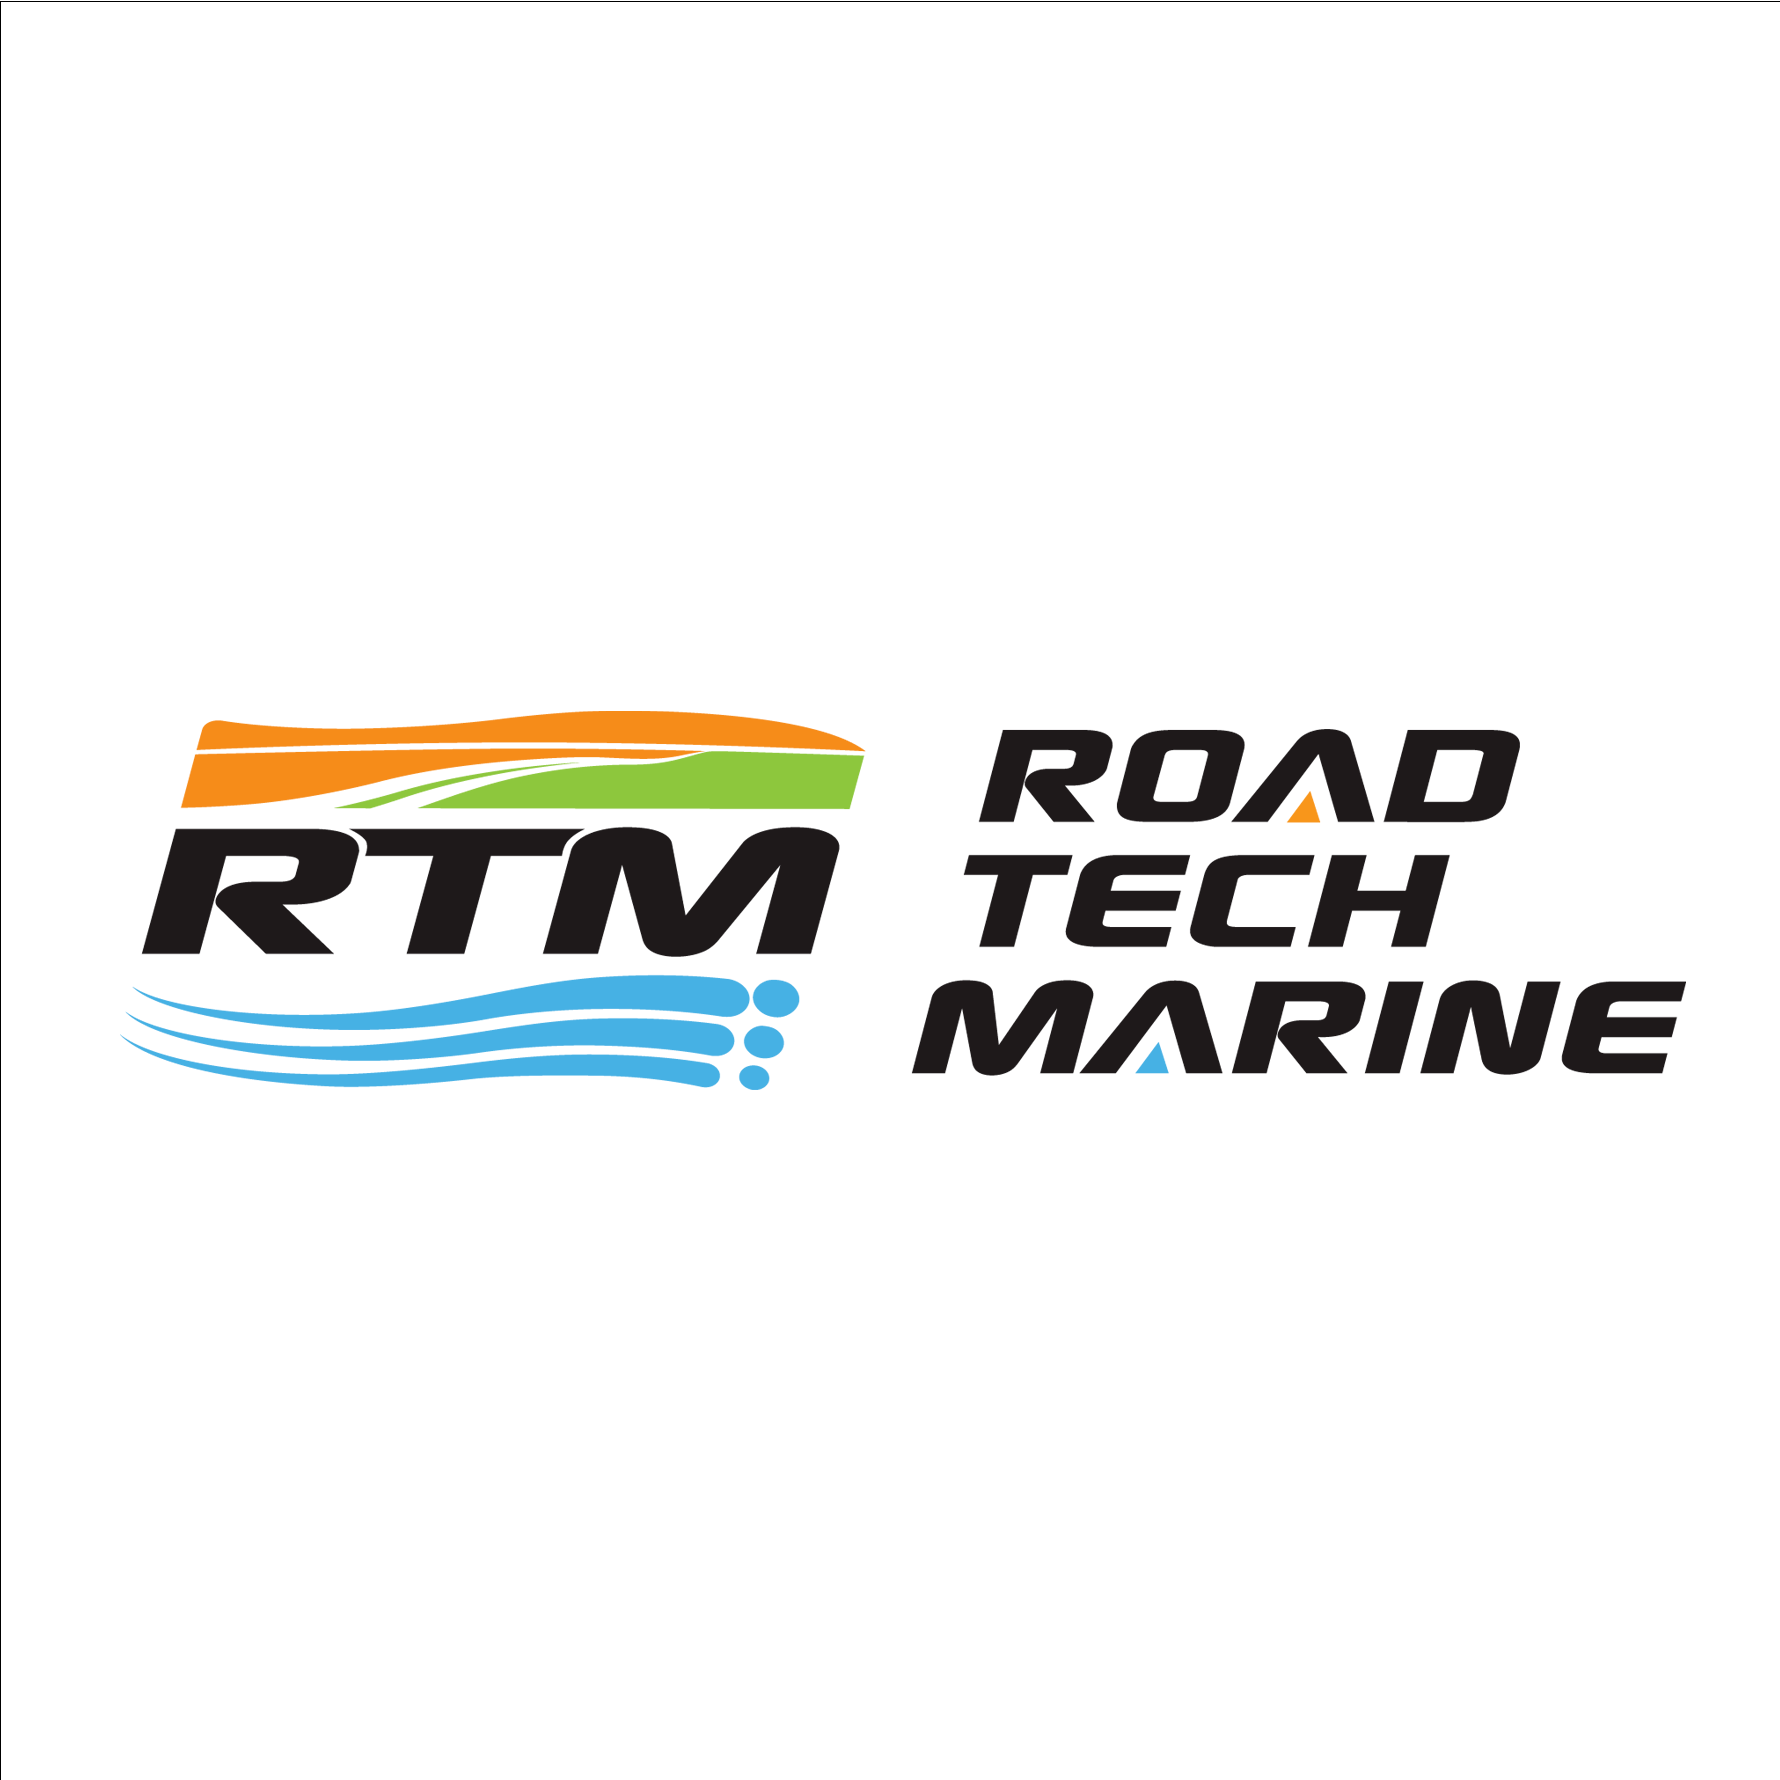 RTM - Road Tech Marine Port Macquarie Logo